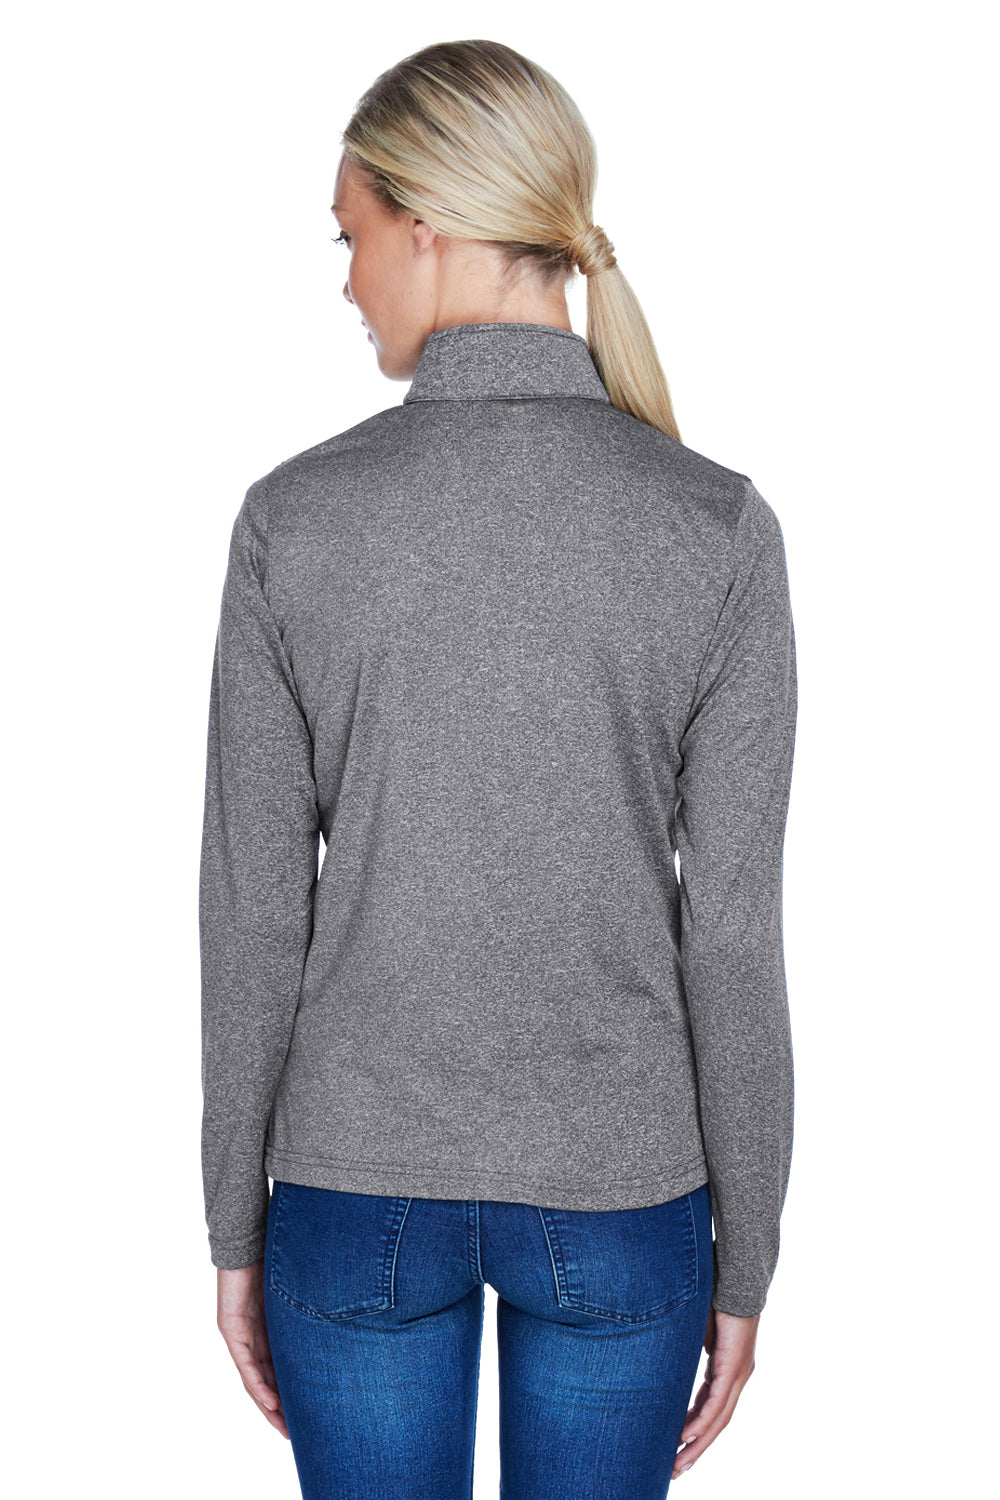 UltraClub 8618W Womens Heather Cool & Dry Performance Moisture Wicking 1/4 Zip Sweatshirt Charcoal Grey Back